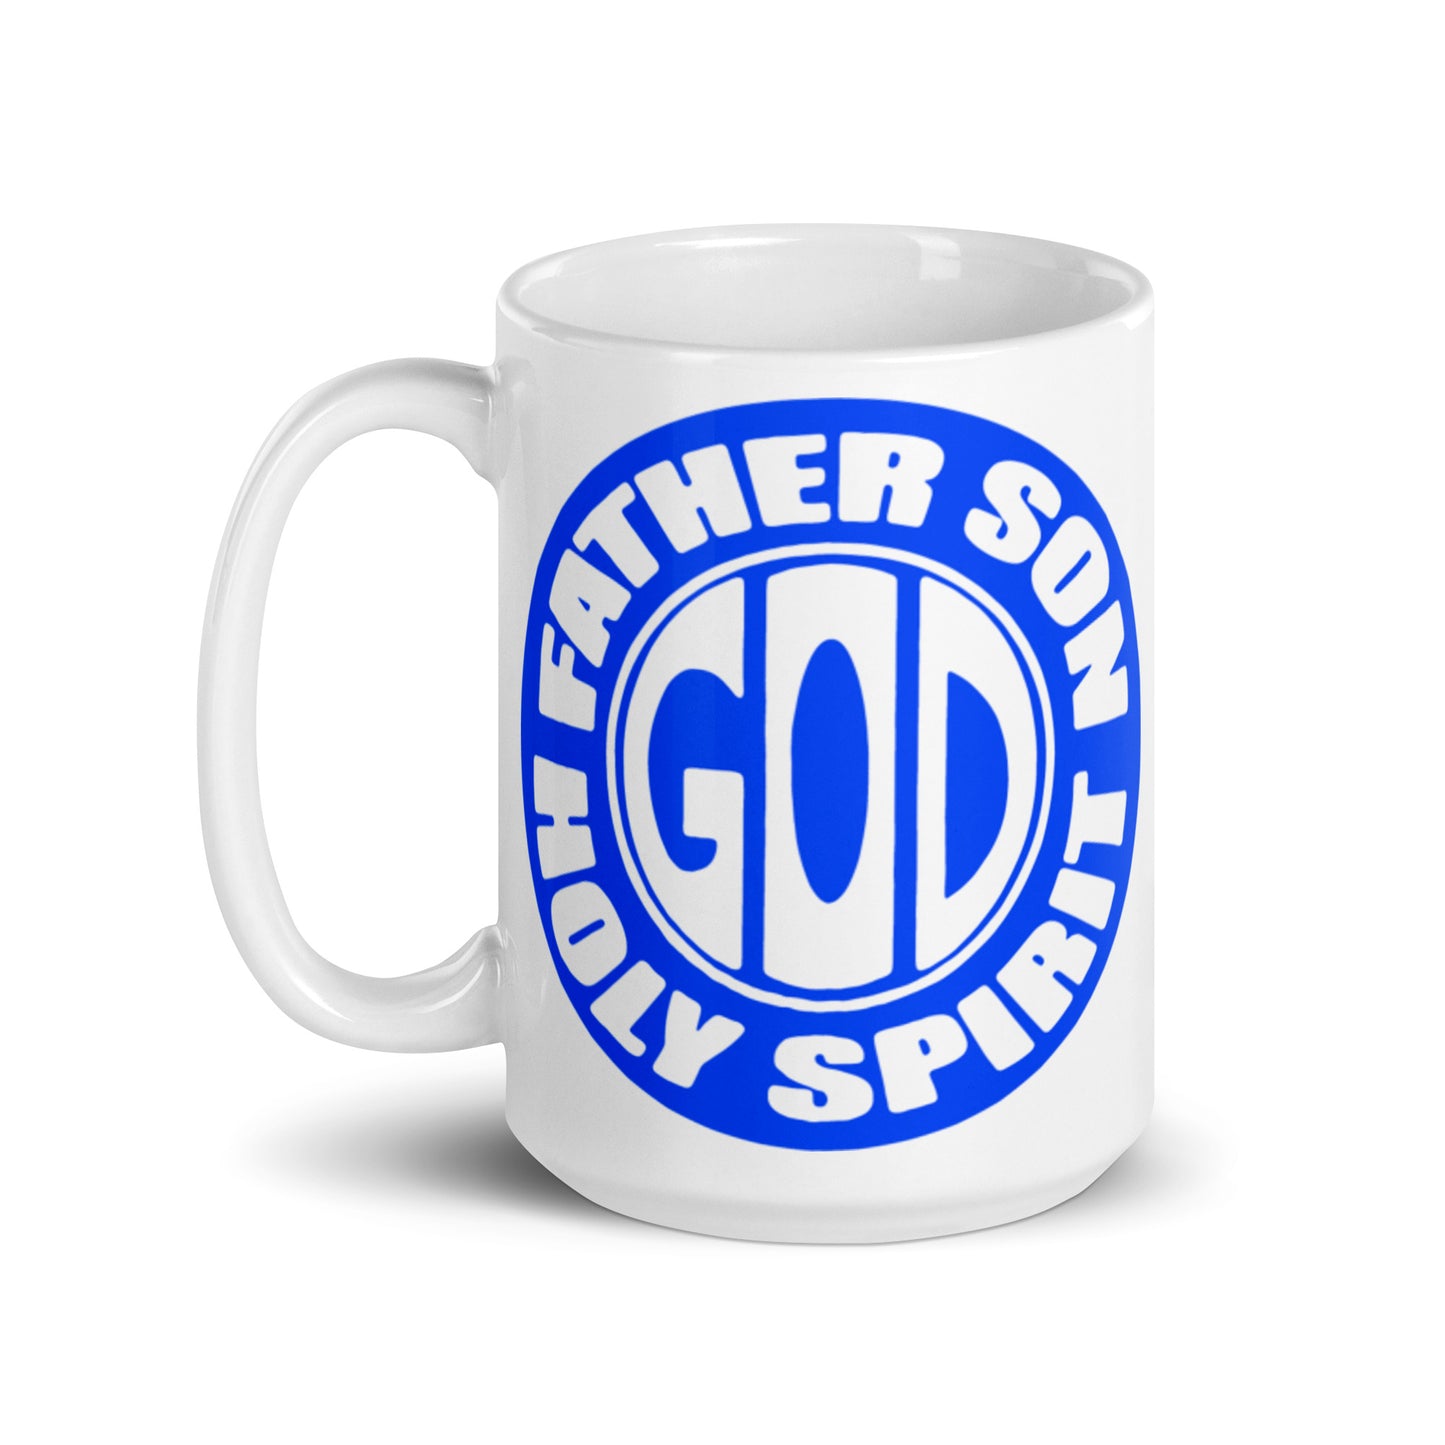 Father Son Holy Spirit White Glossy Mug